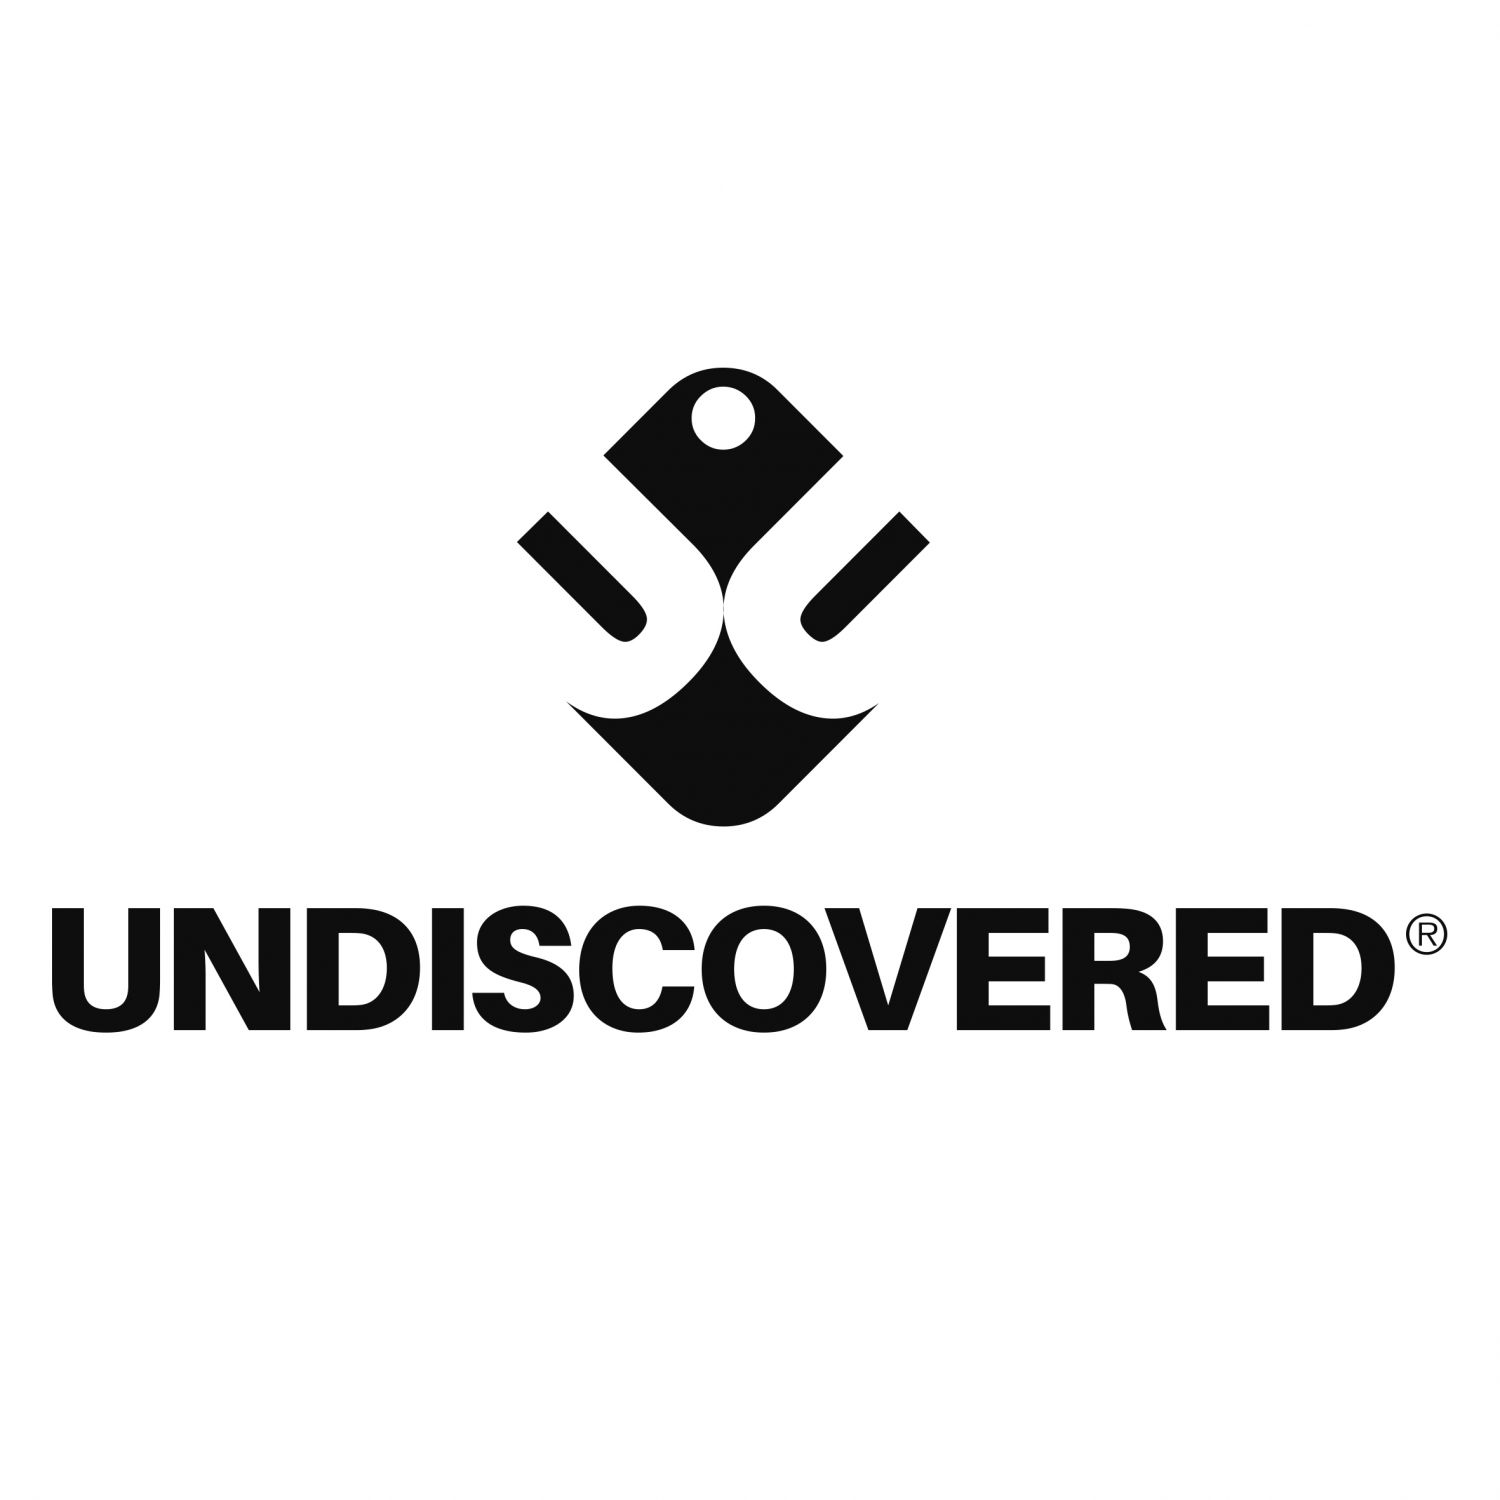 Undiscovered logo 2015 (High Resol)